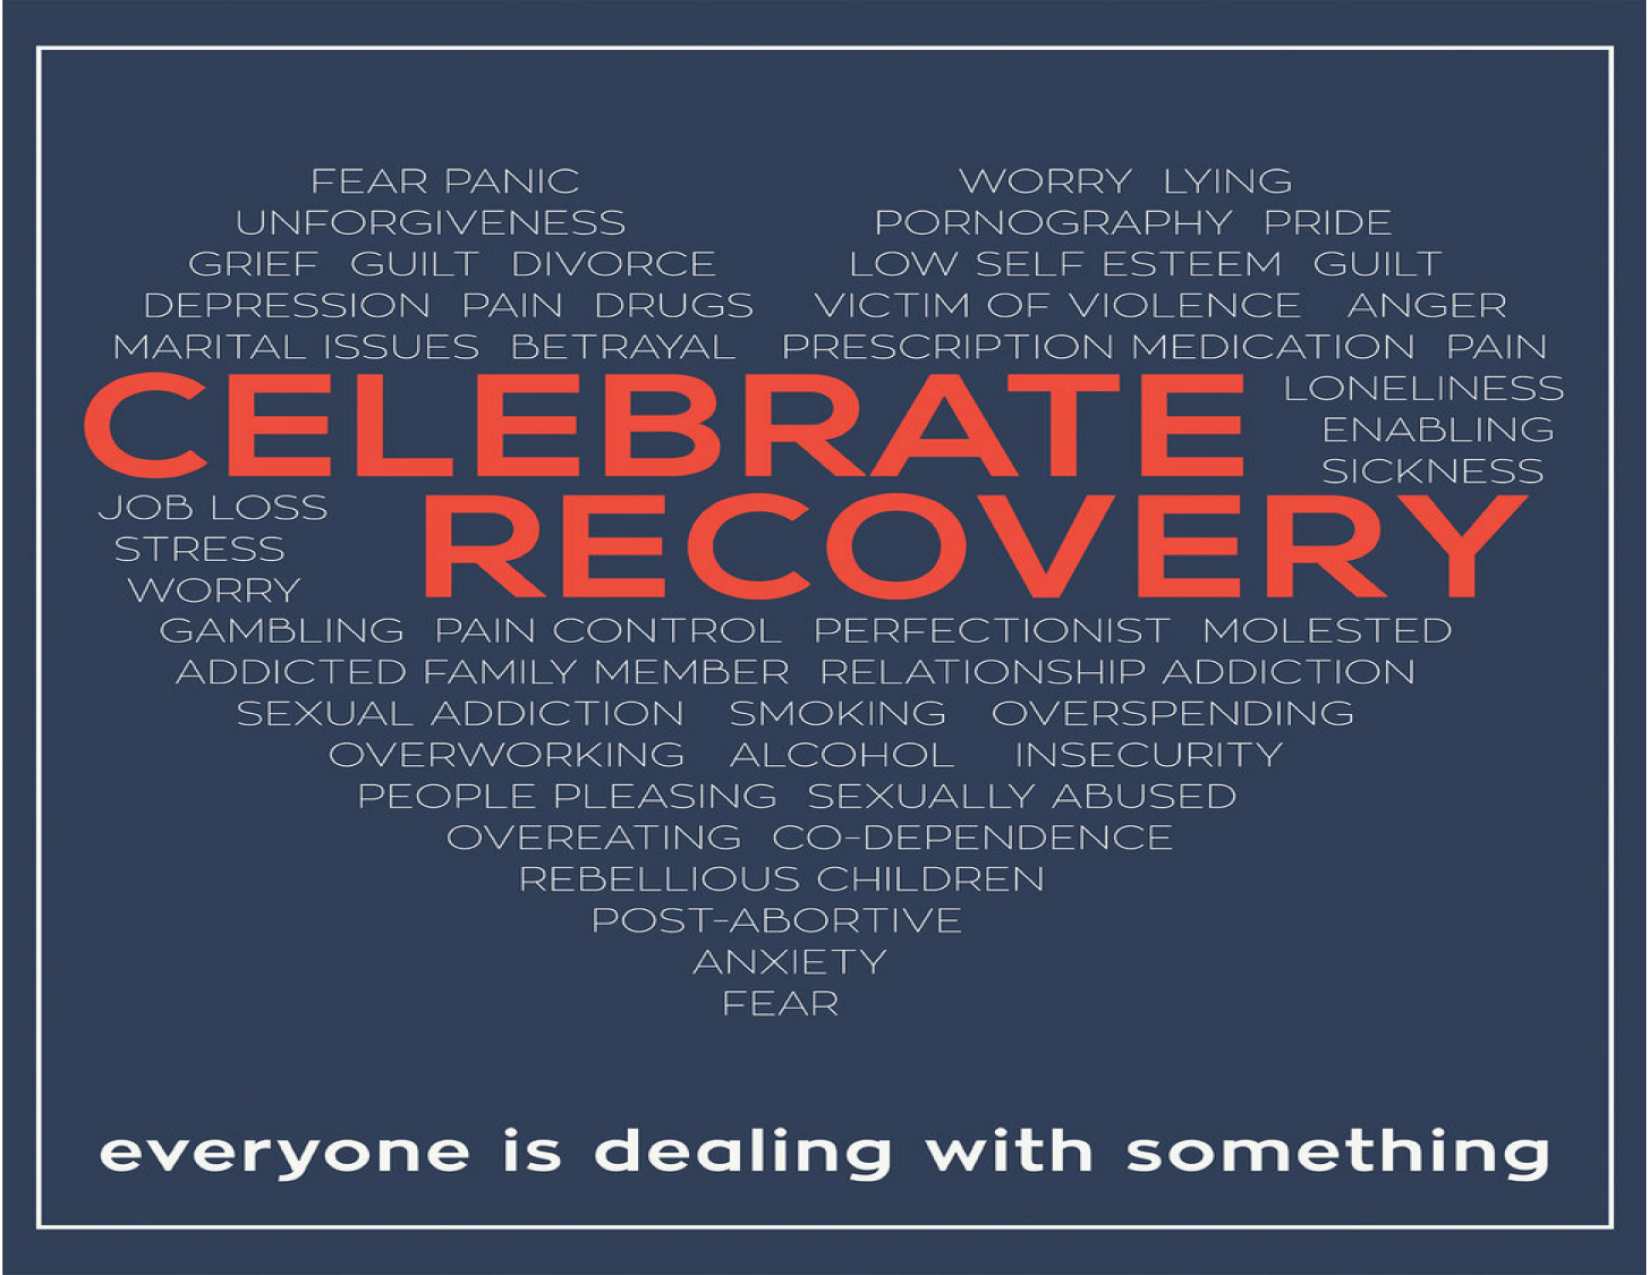 celebrate recovery meetings tonight